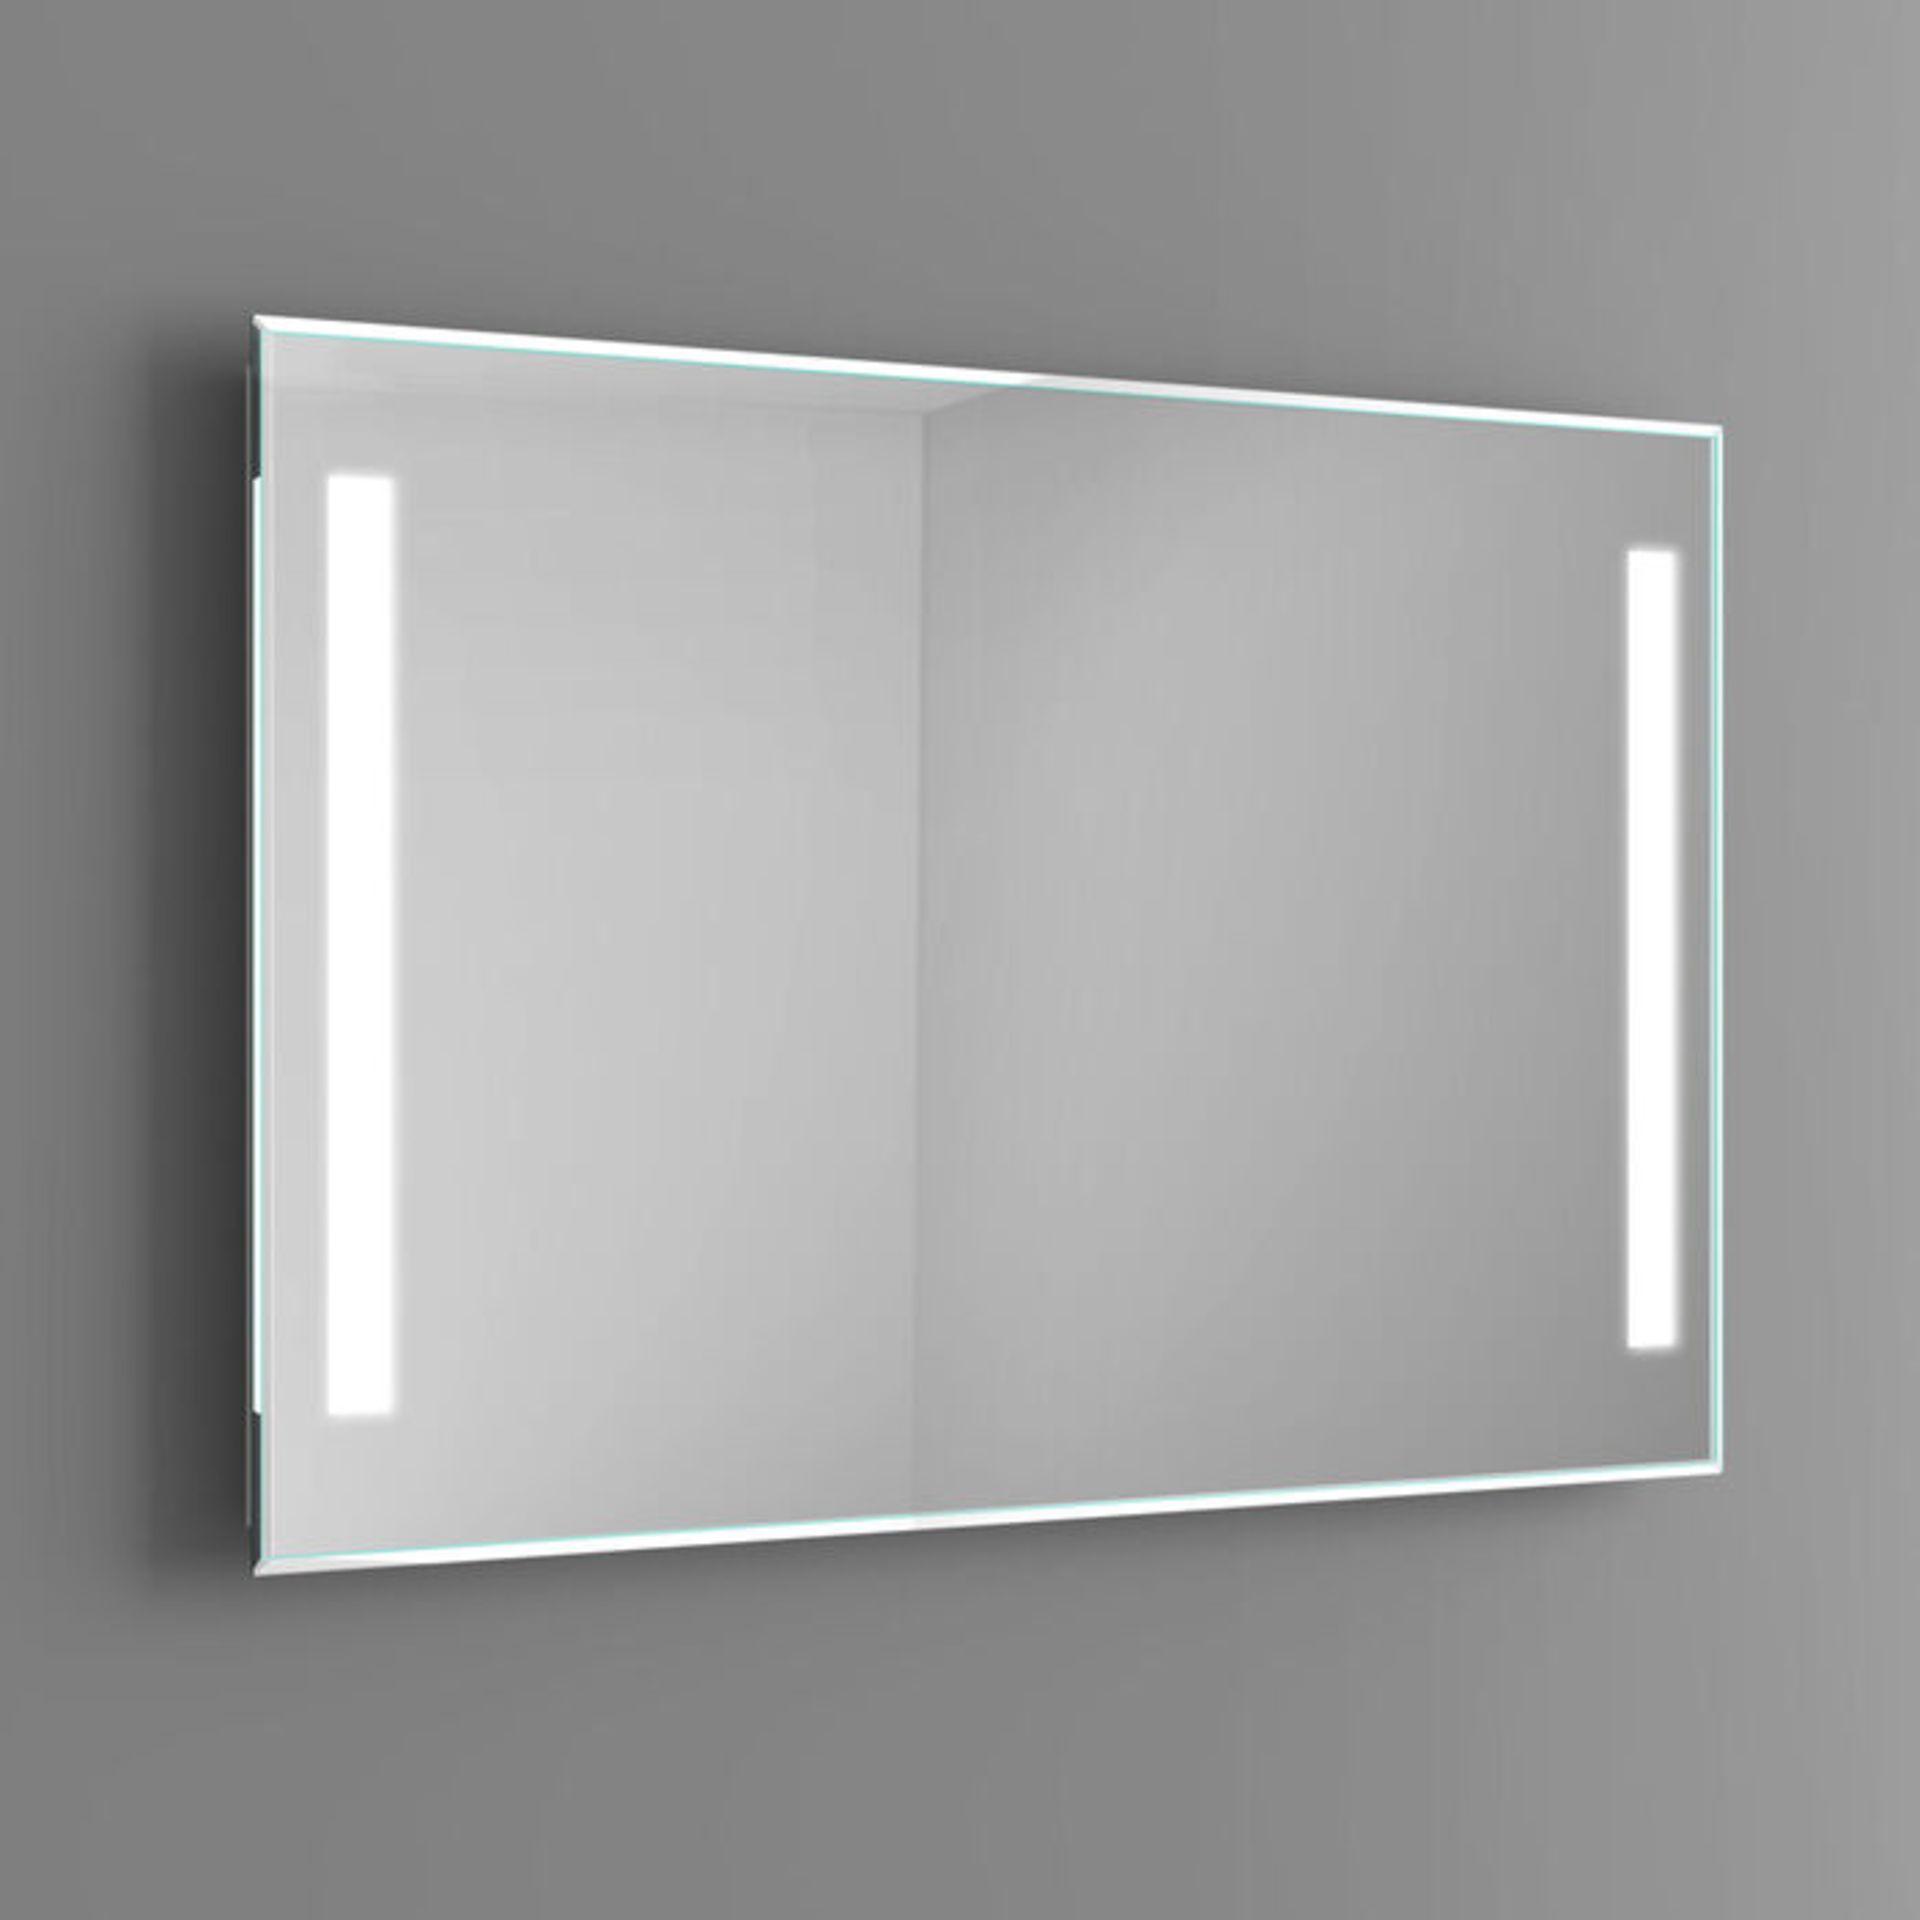 (DD150) 1000x600mm Omega Illuminated LED Mirror. RRP £349.99. Flattering LED lights provide a ... - Image 3 of 3